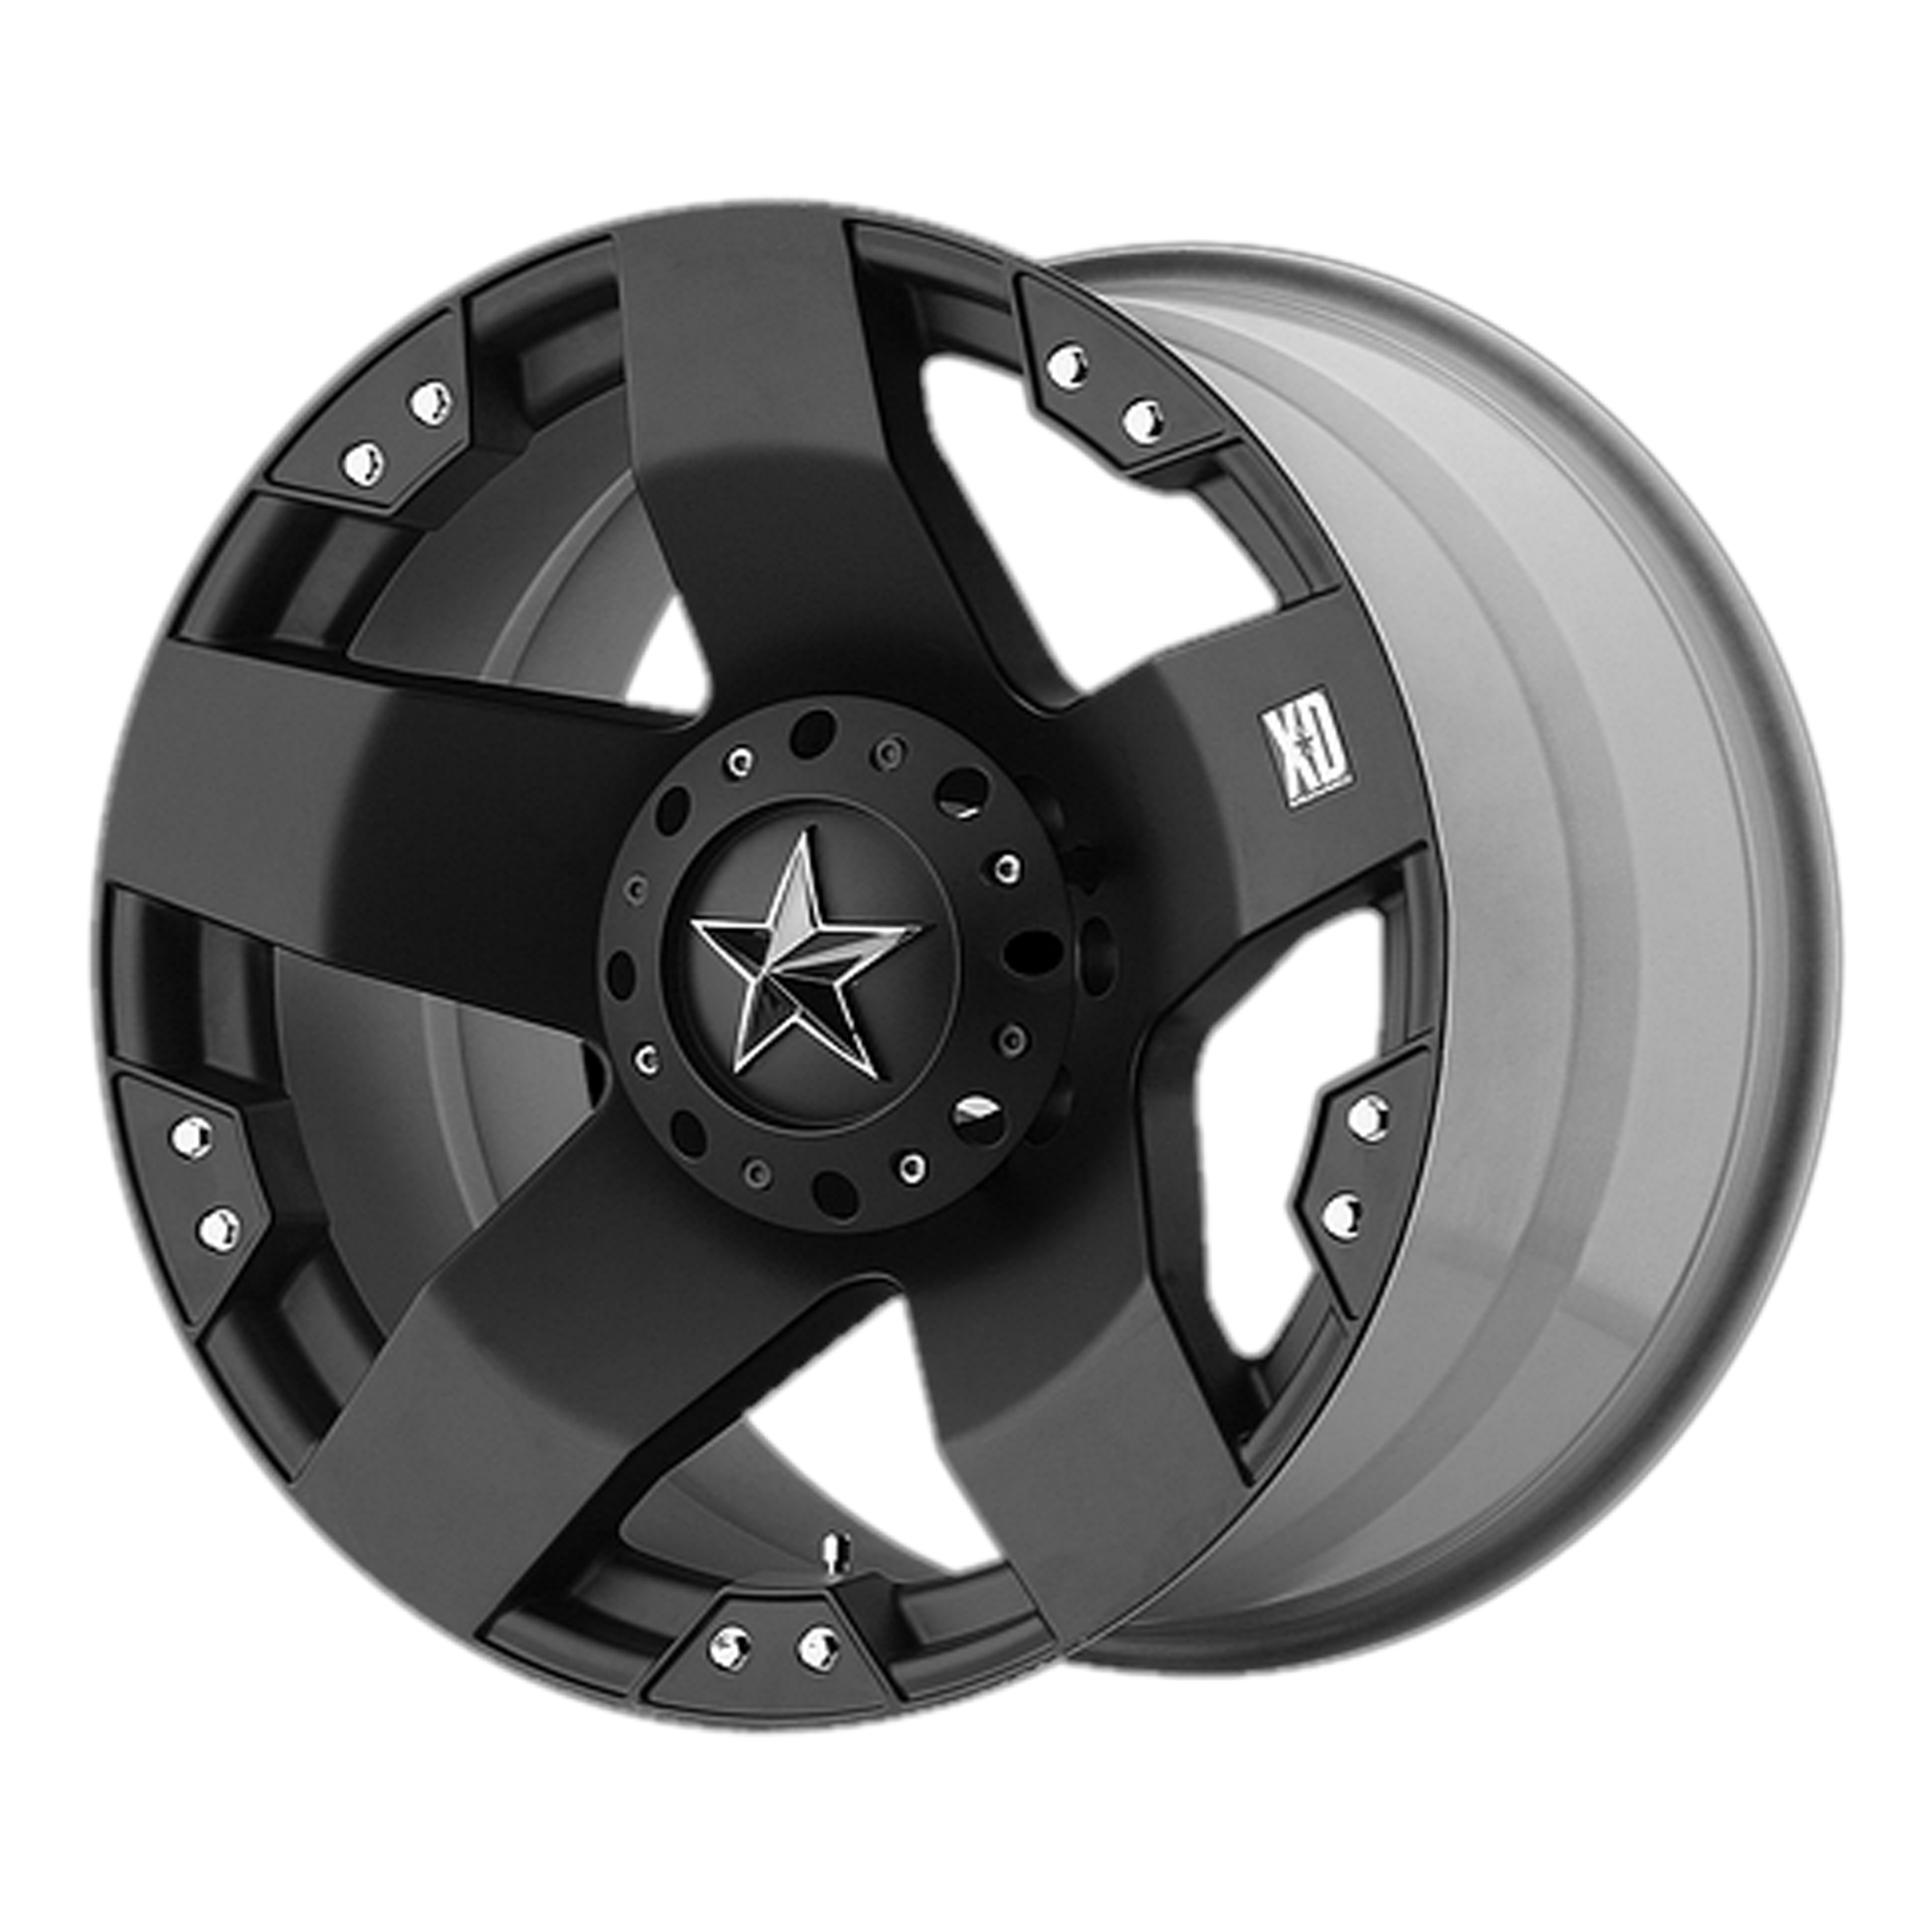 ROCKSTAR 17x8 5x114.30/5x127.00 MATTE BLACK (35 mm) - Tires and Engine Performance